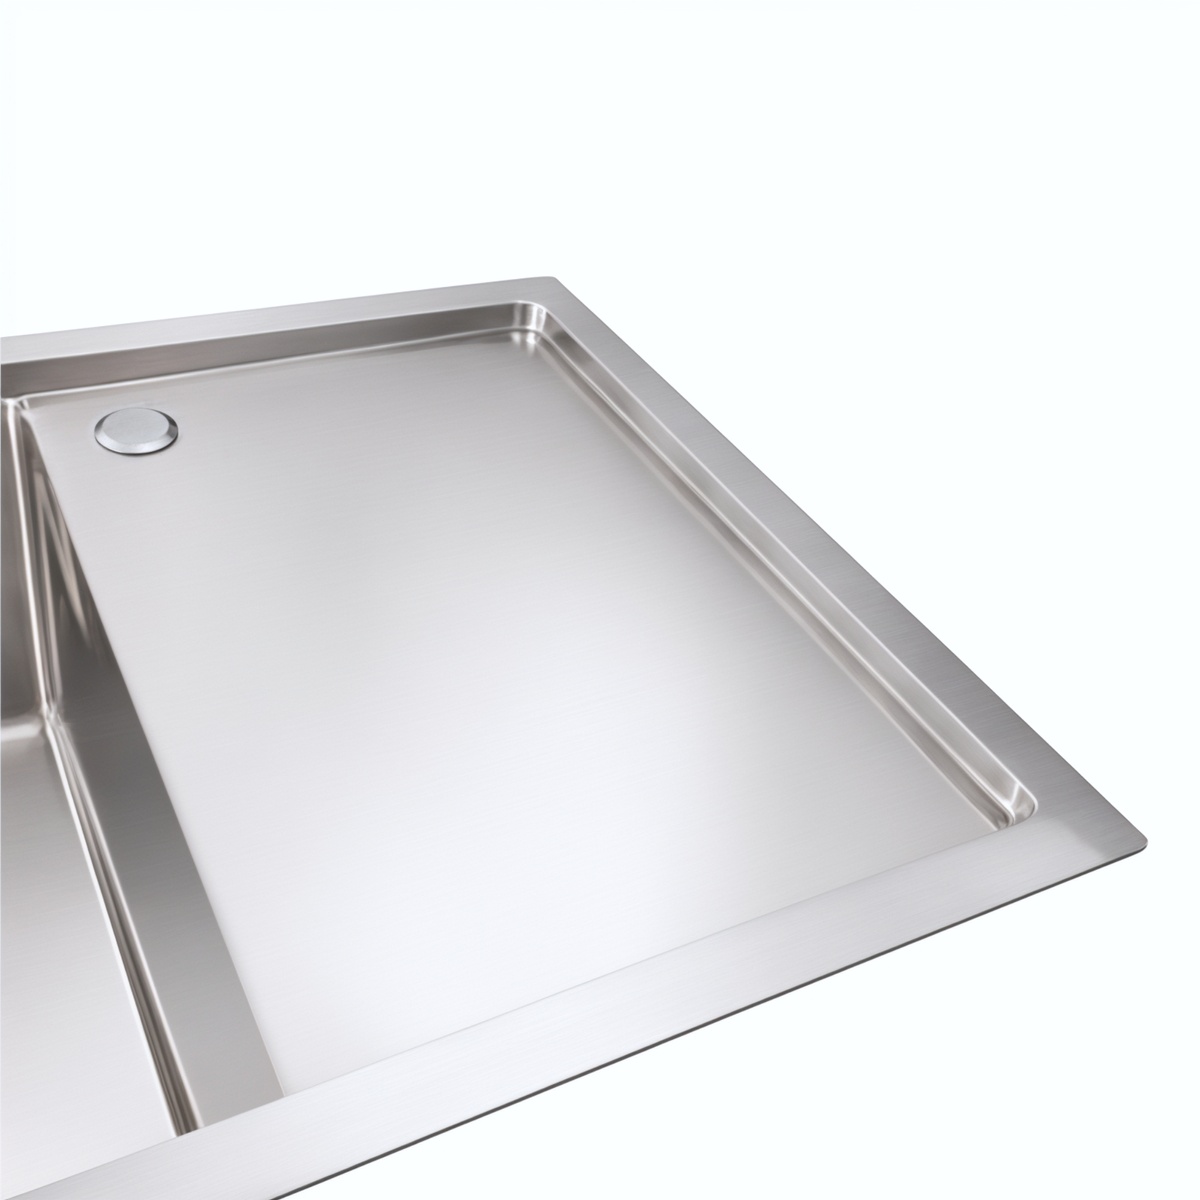 Мийка для кухні із нержавіючої сталі прямокутна PLATINUM Handmade L 780x440x230мм глянцева 1мм із сифоном PLS-A37440